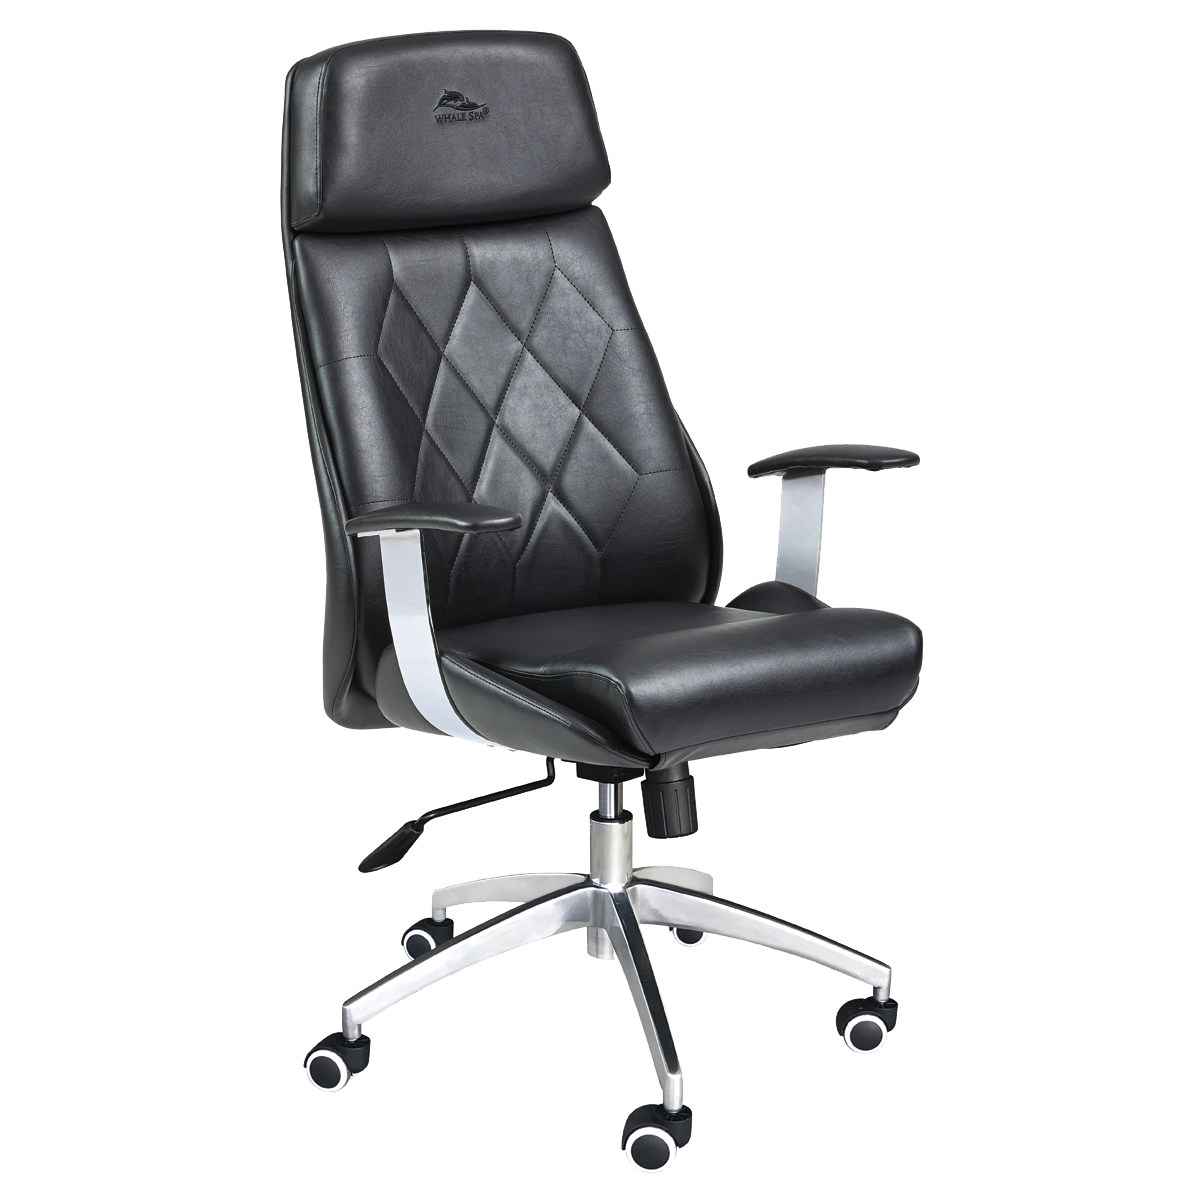 Whale Spa Black Customer Chair Diamond 3309 Nail Salon Manicure Chair for Clients | Salon and Spa Furniture